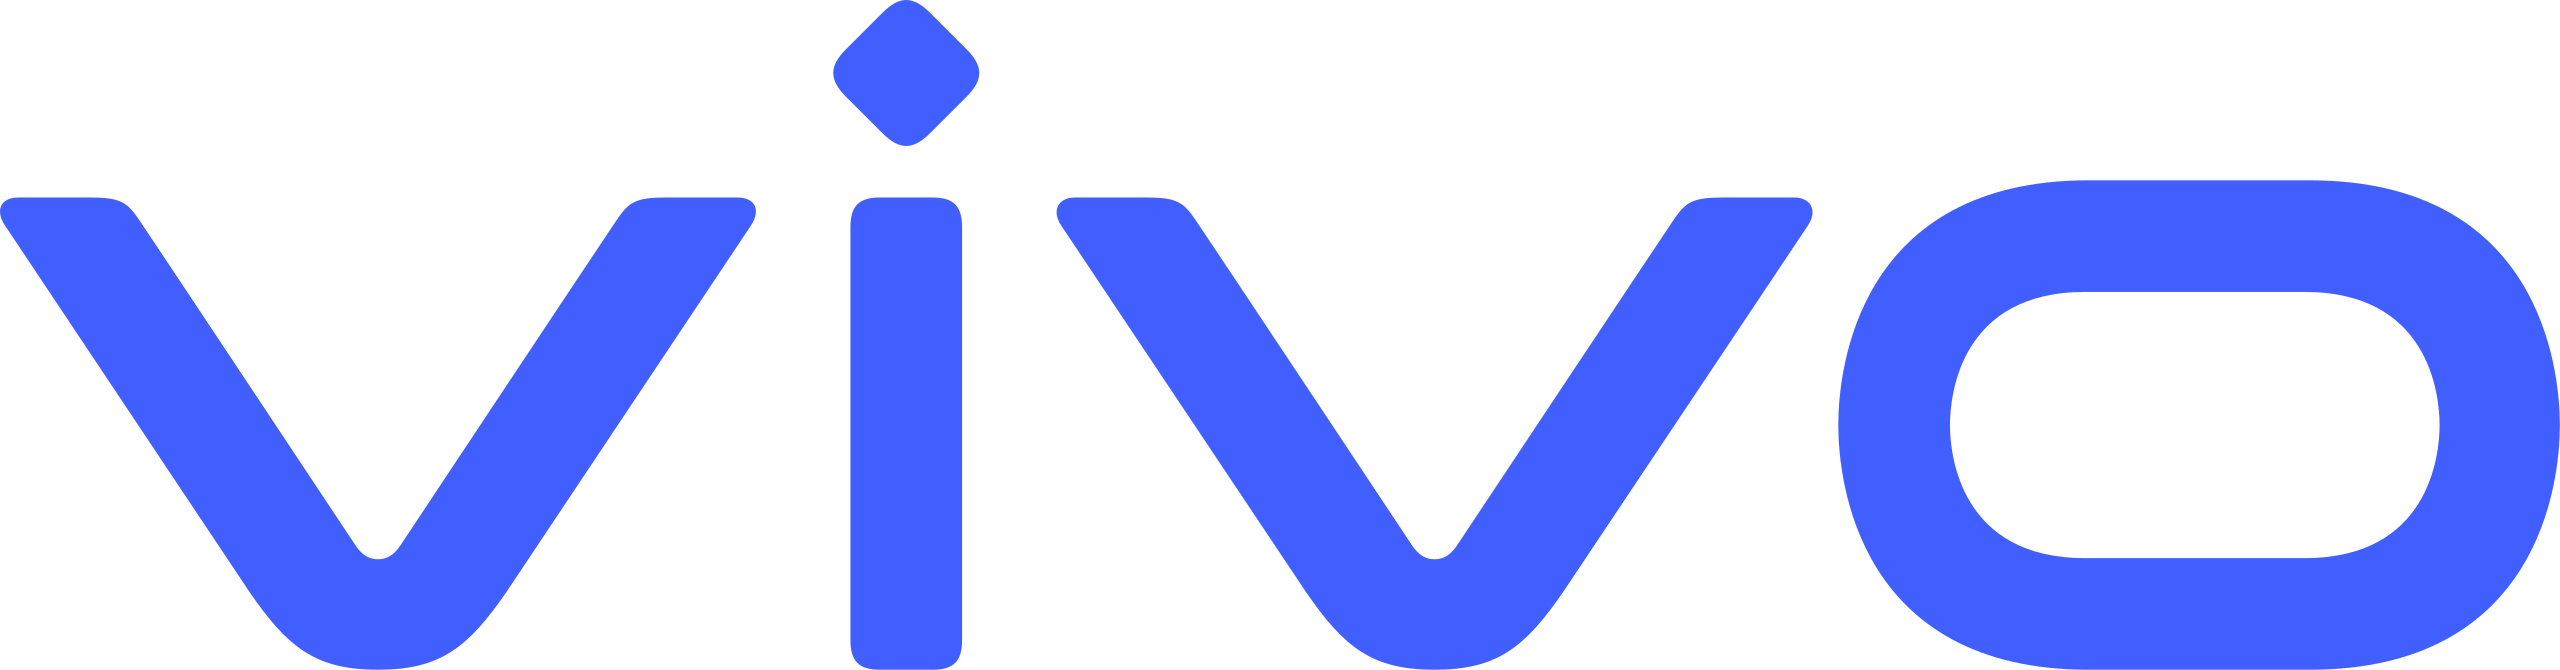 Vivo_logo_2019.svg